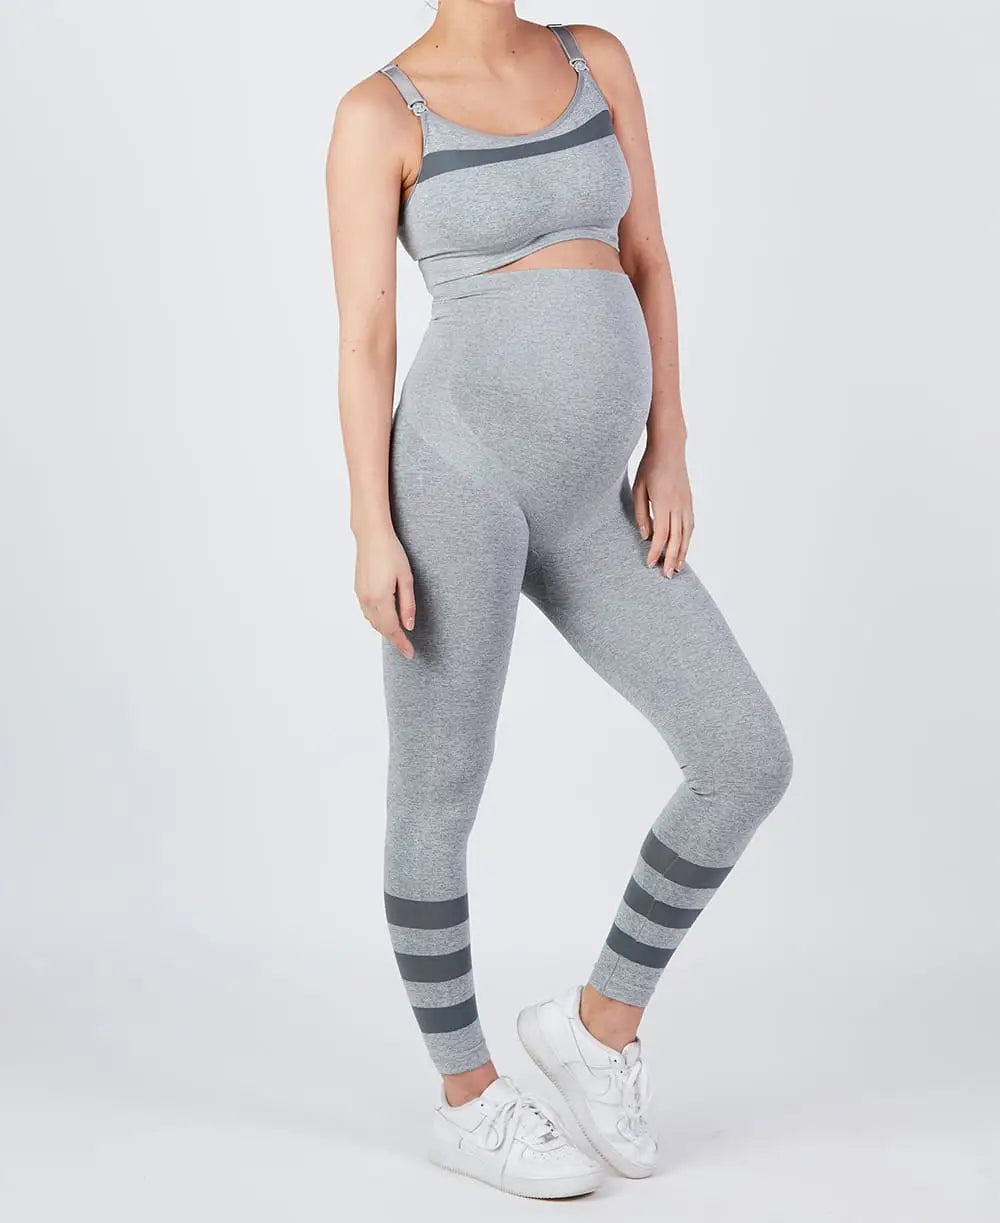 Sport and maternity leggings Woma grey - Legging